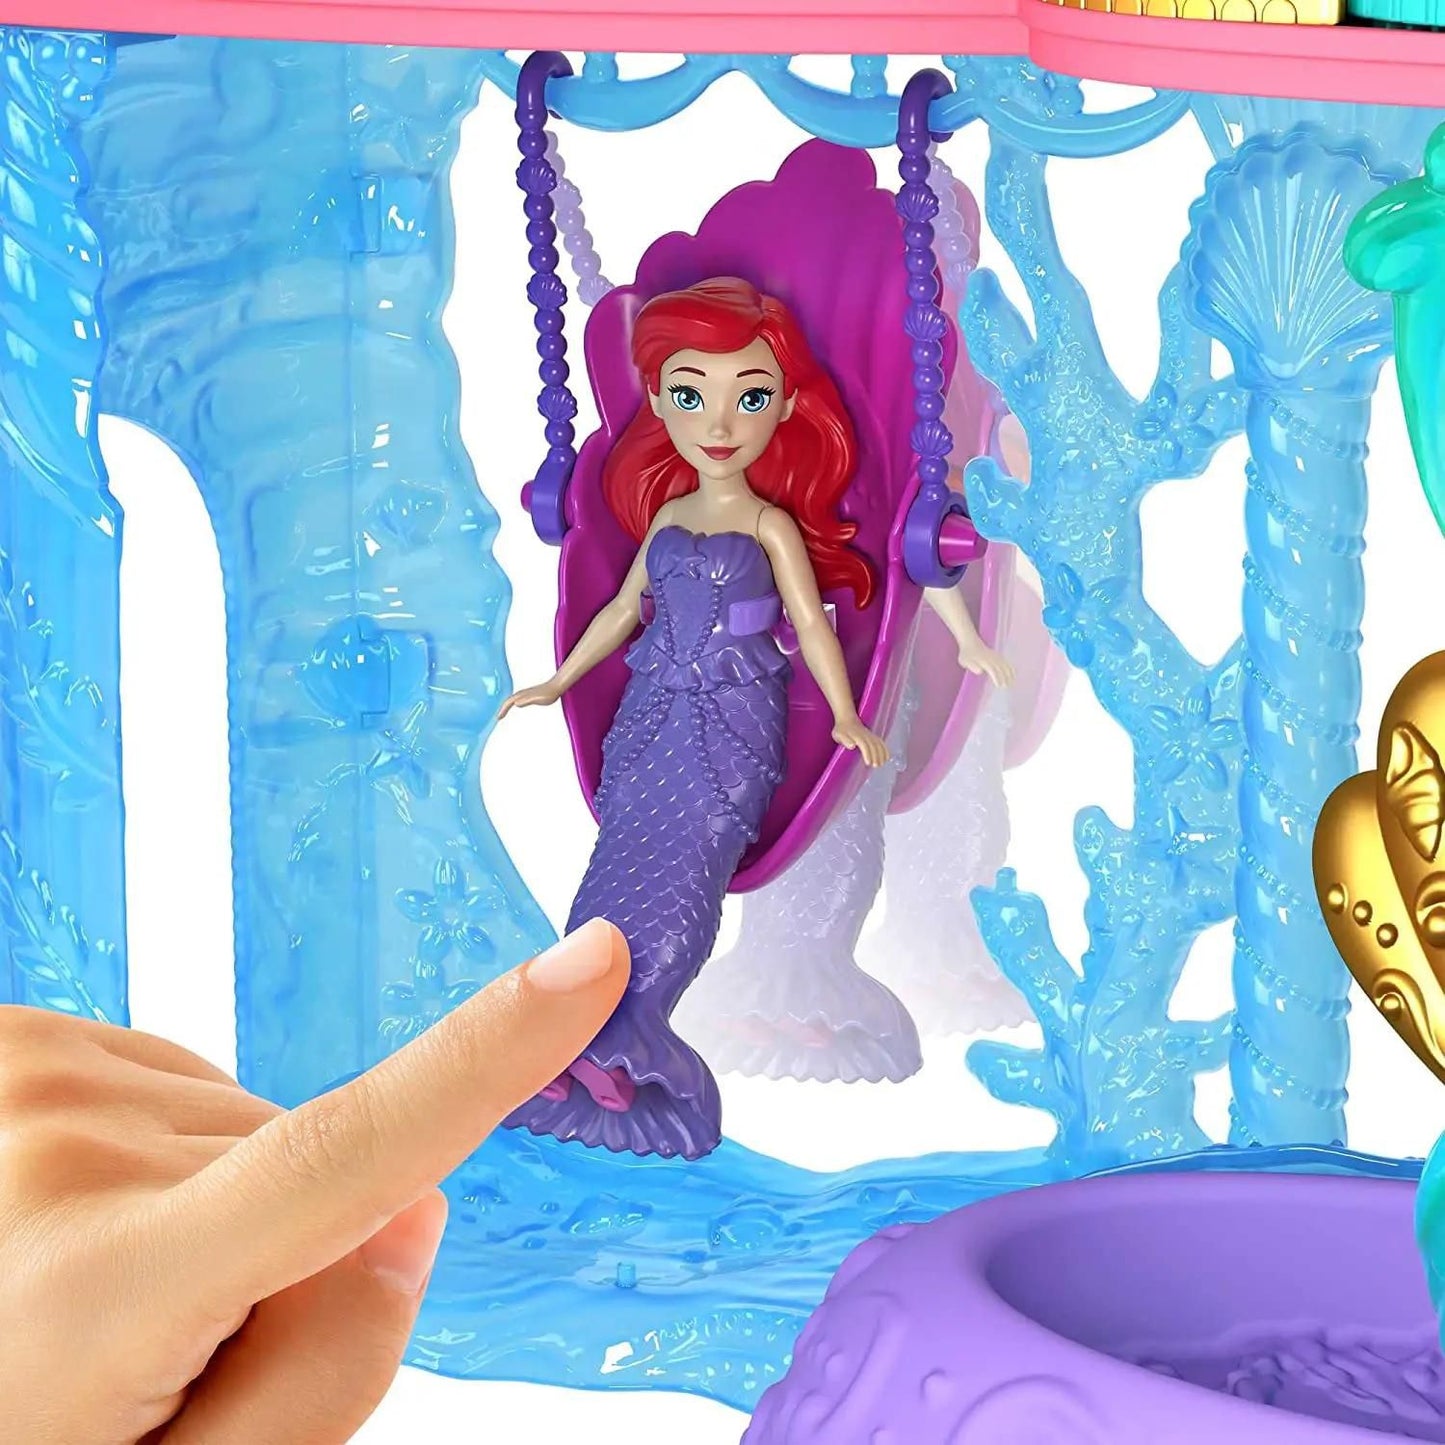 Mattel - Disney Princess Ariel's Castle of Two Worlds HLW95